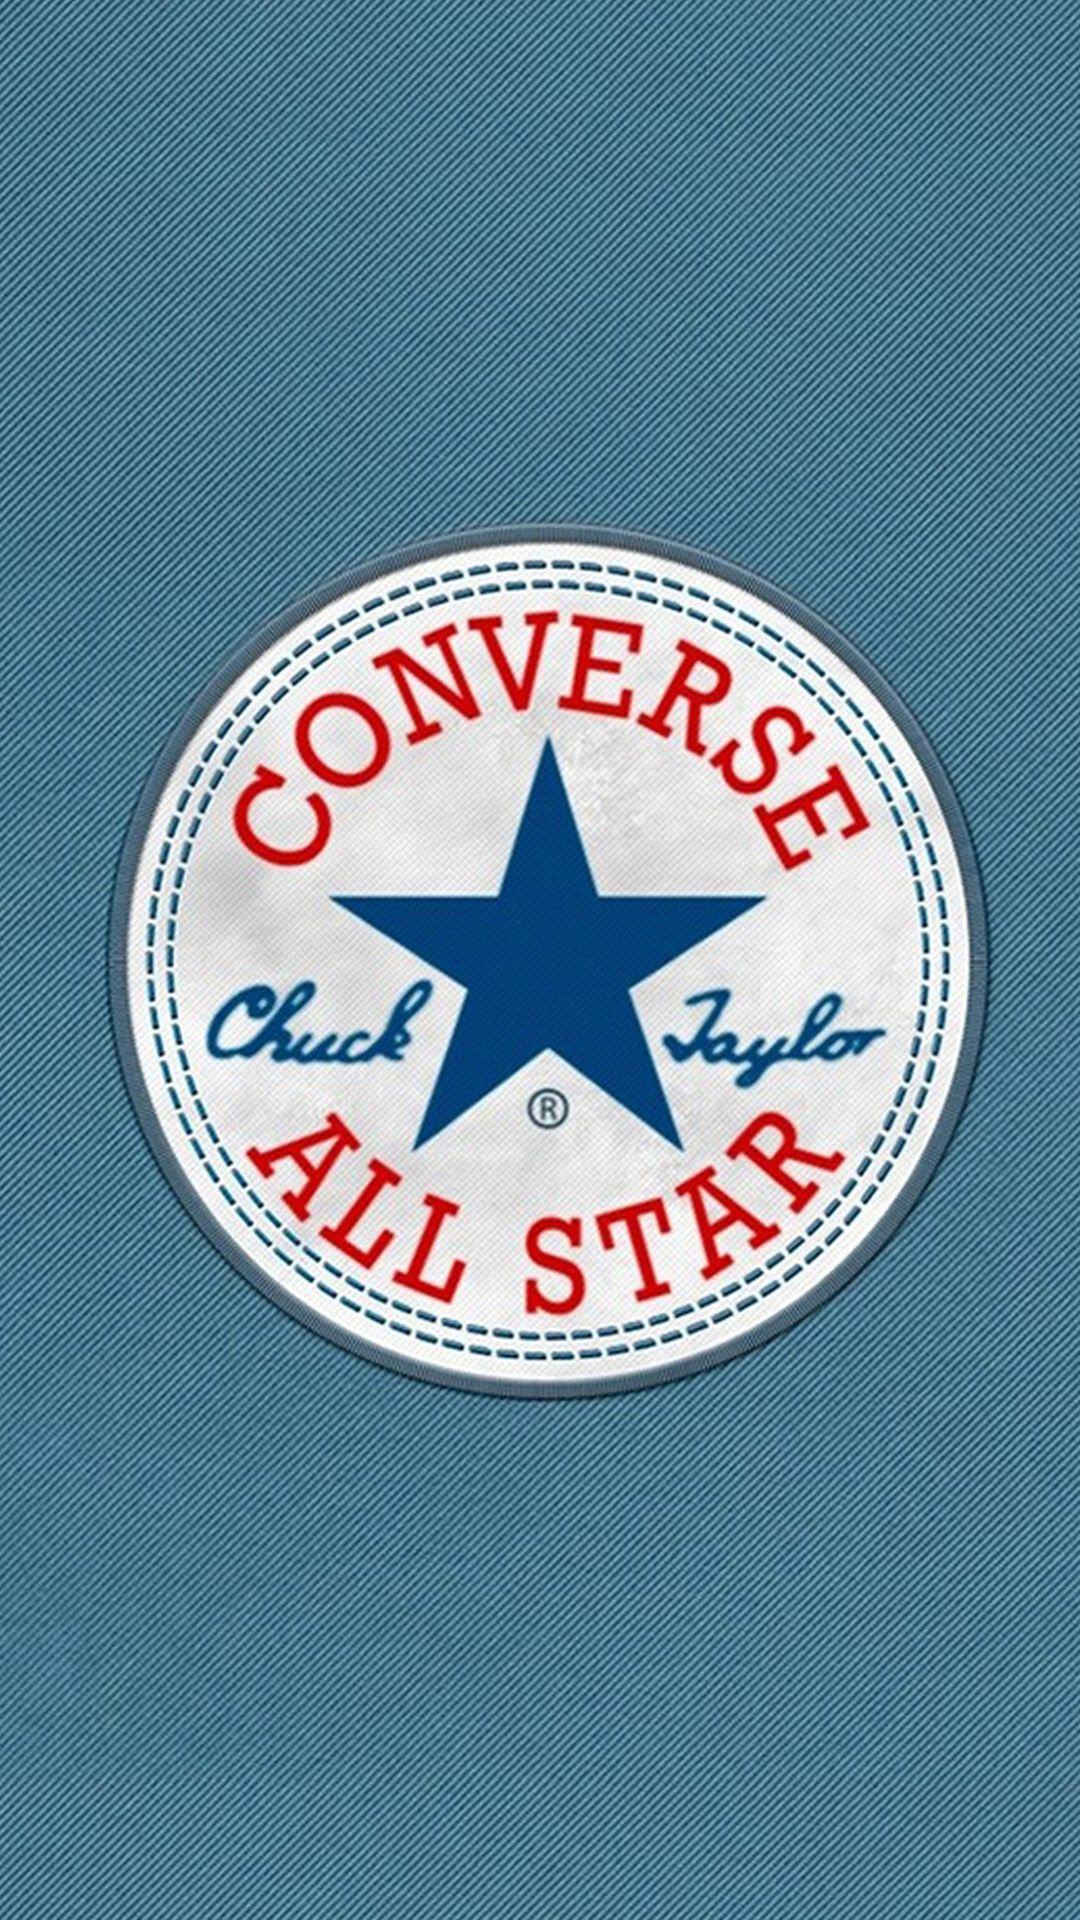 Converse All star logo. HTC One wallpaper. Star logo